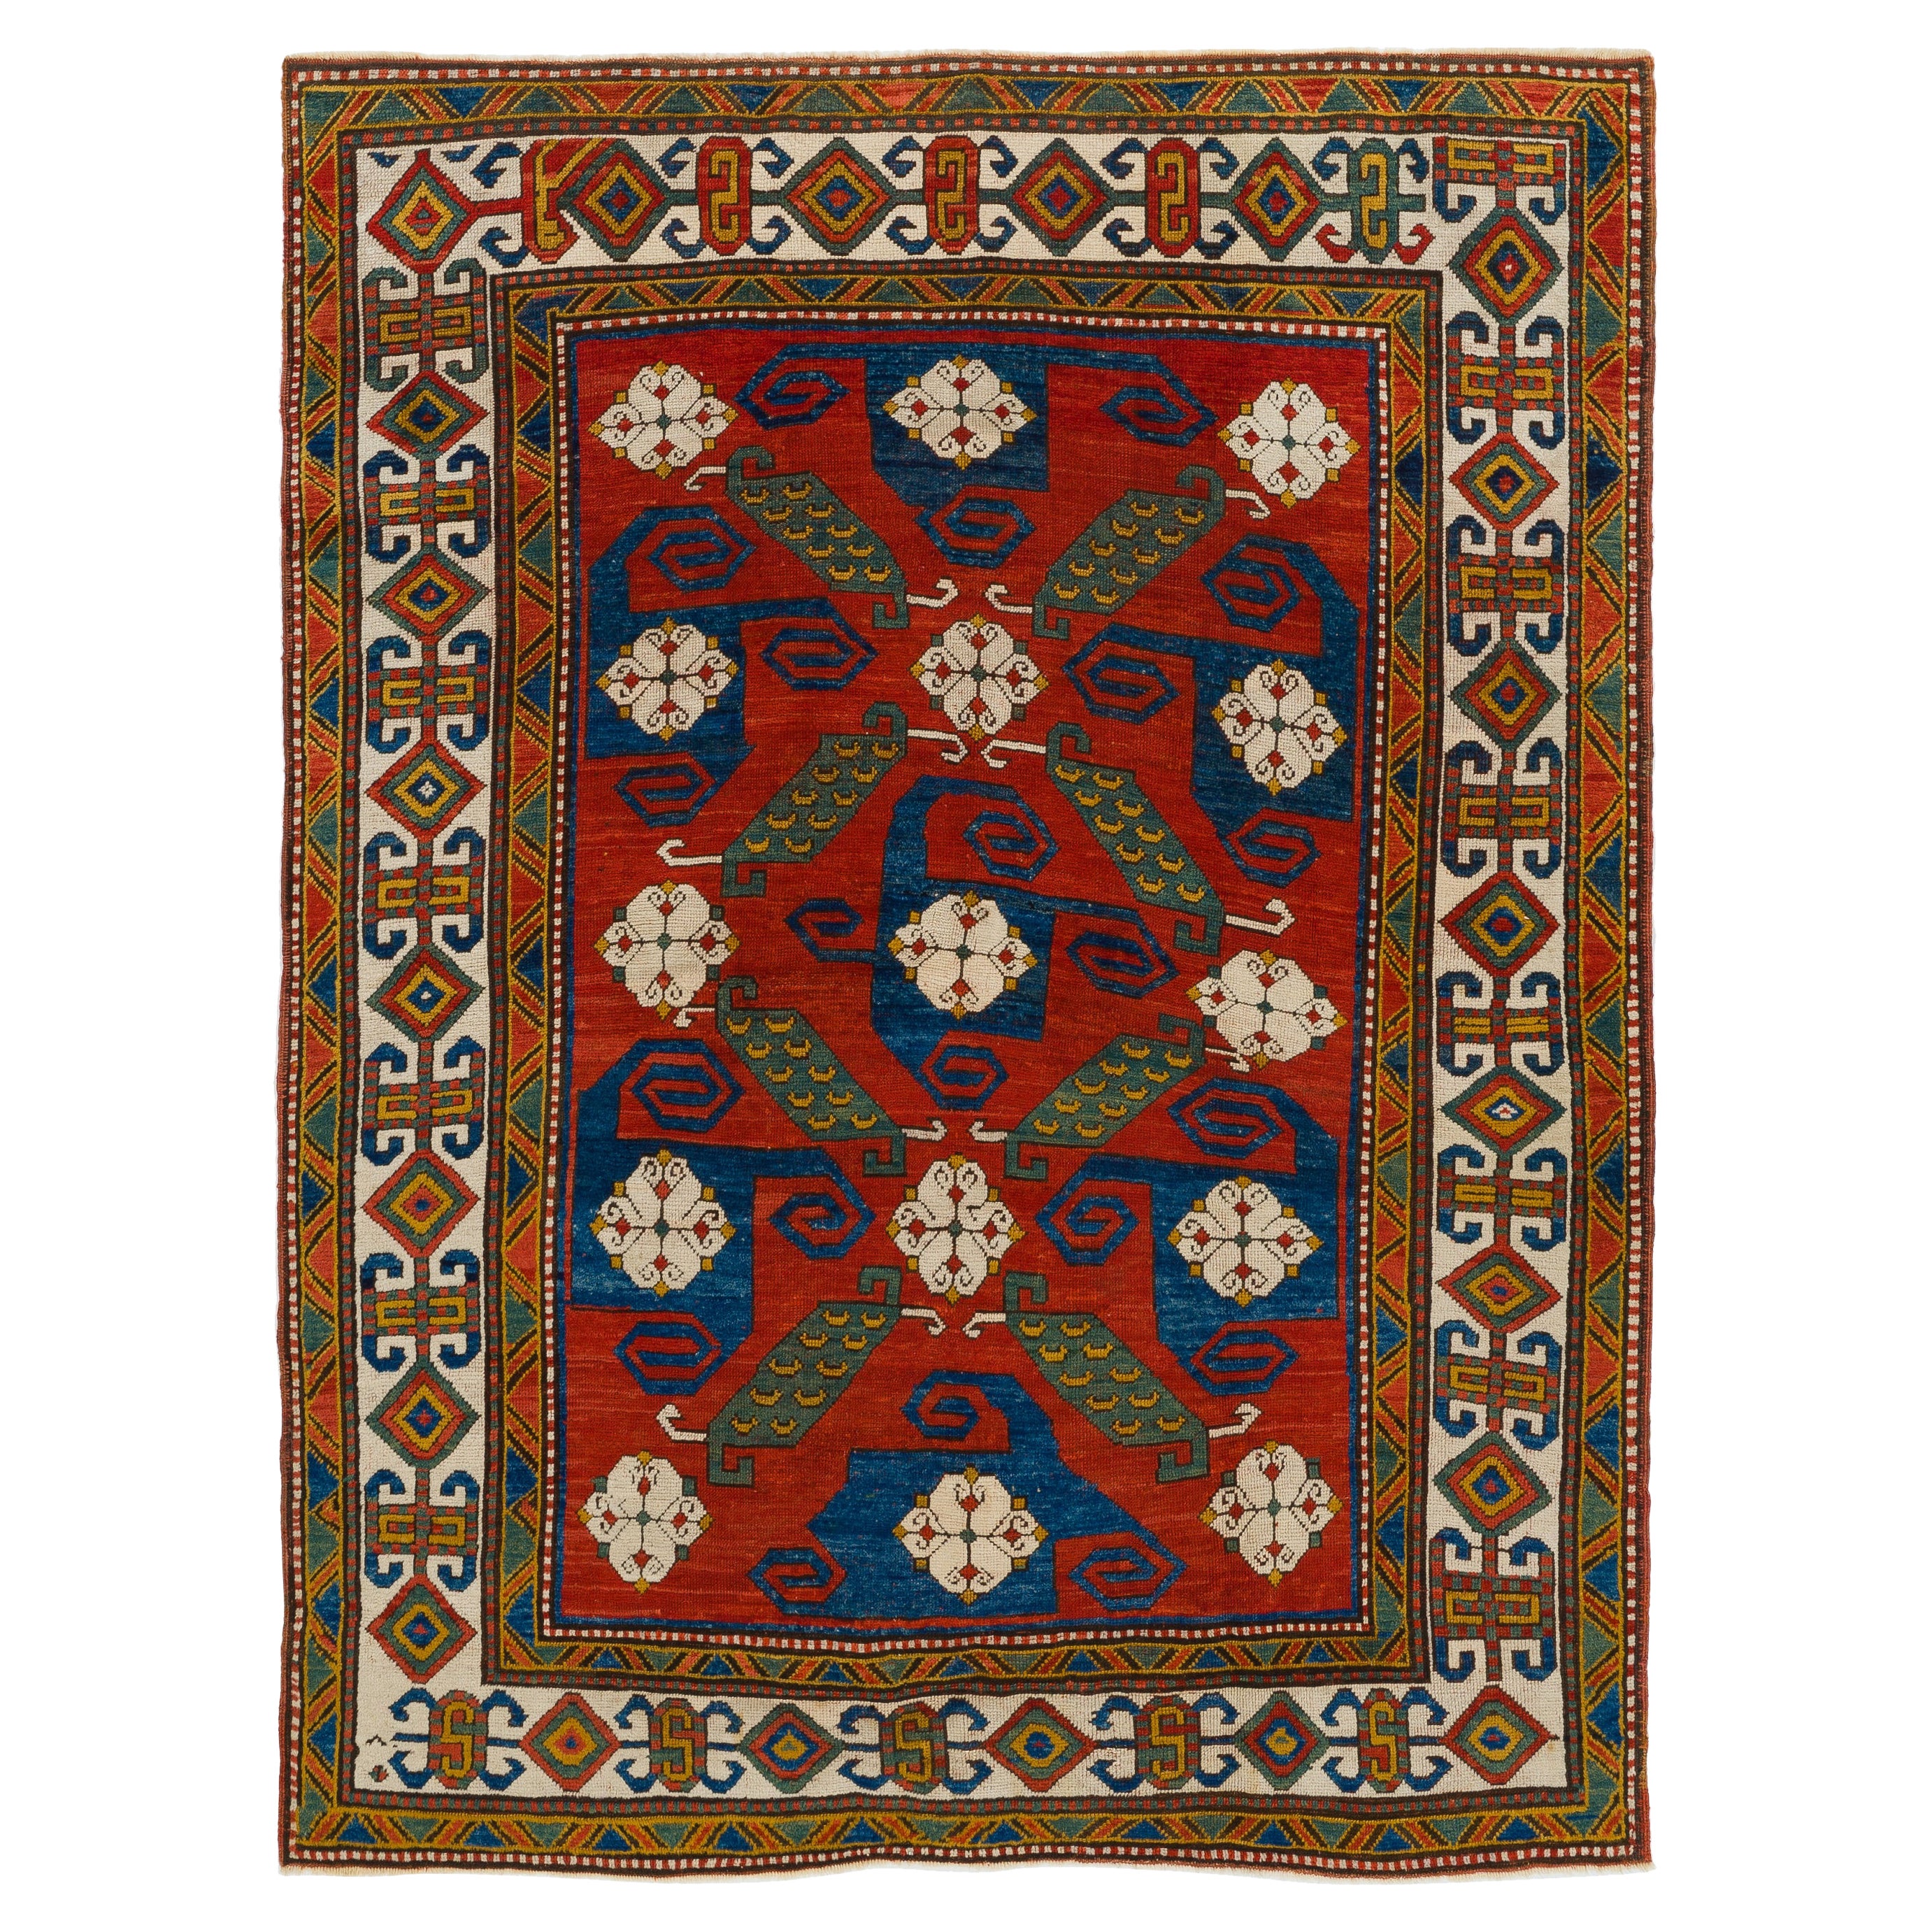 Antique Caucasian Pinwheel Kazak Rug. Top Shelf Collectors Carpet. 5'6" x 7'2"